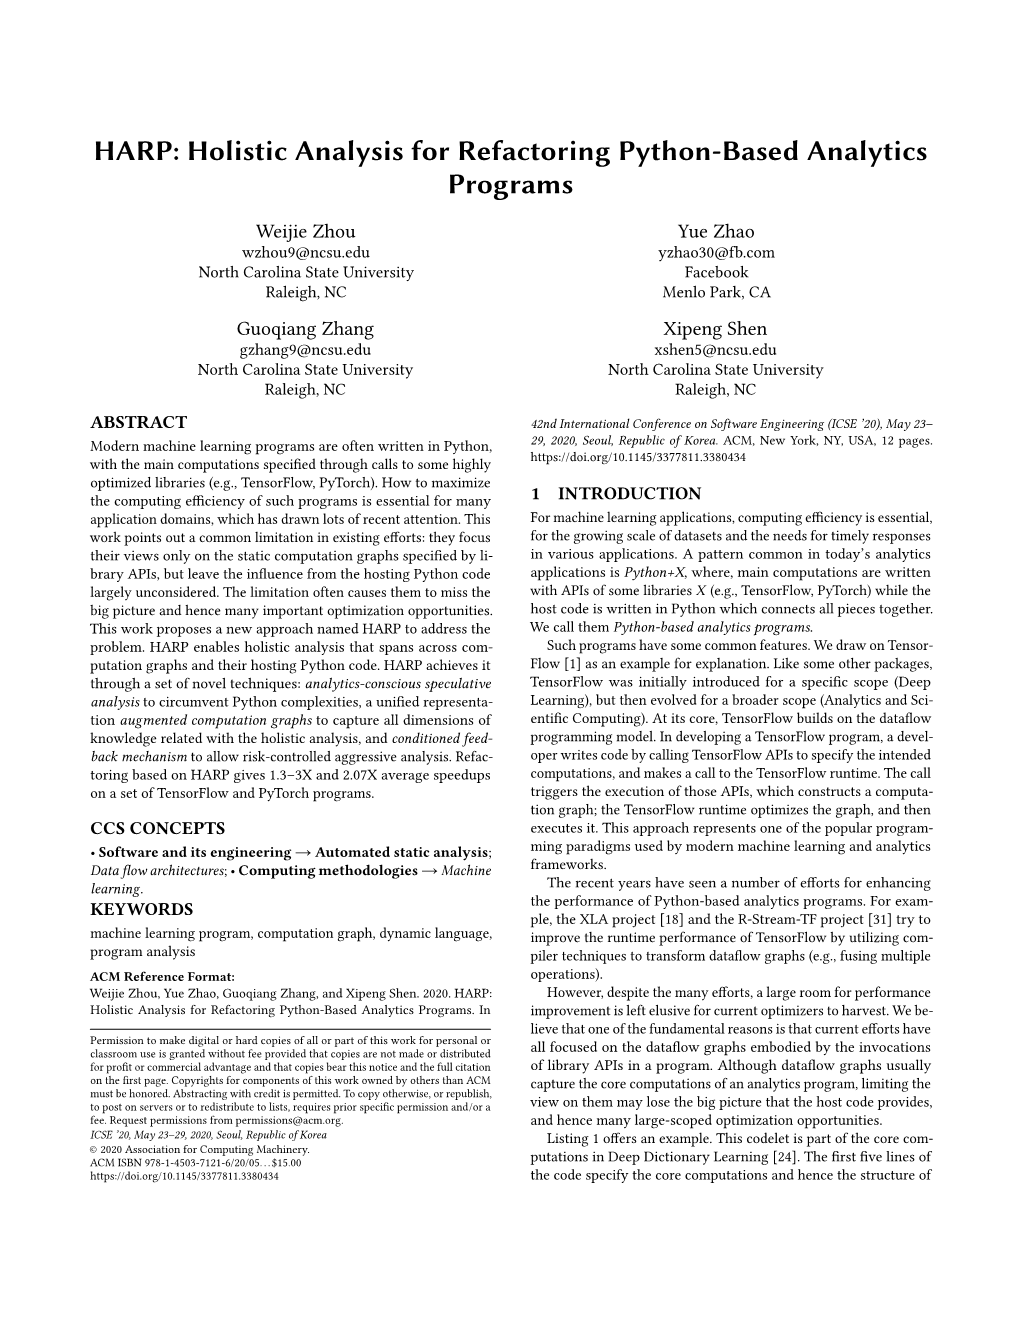 Holistic Analysis for Refactoring Python-Based Analytics Programs